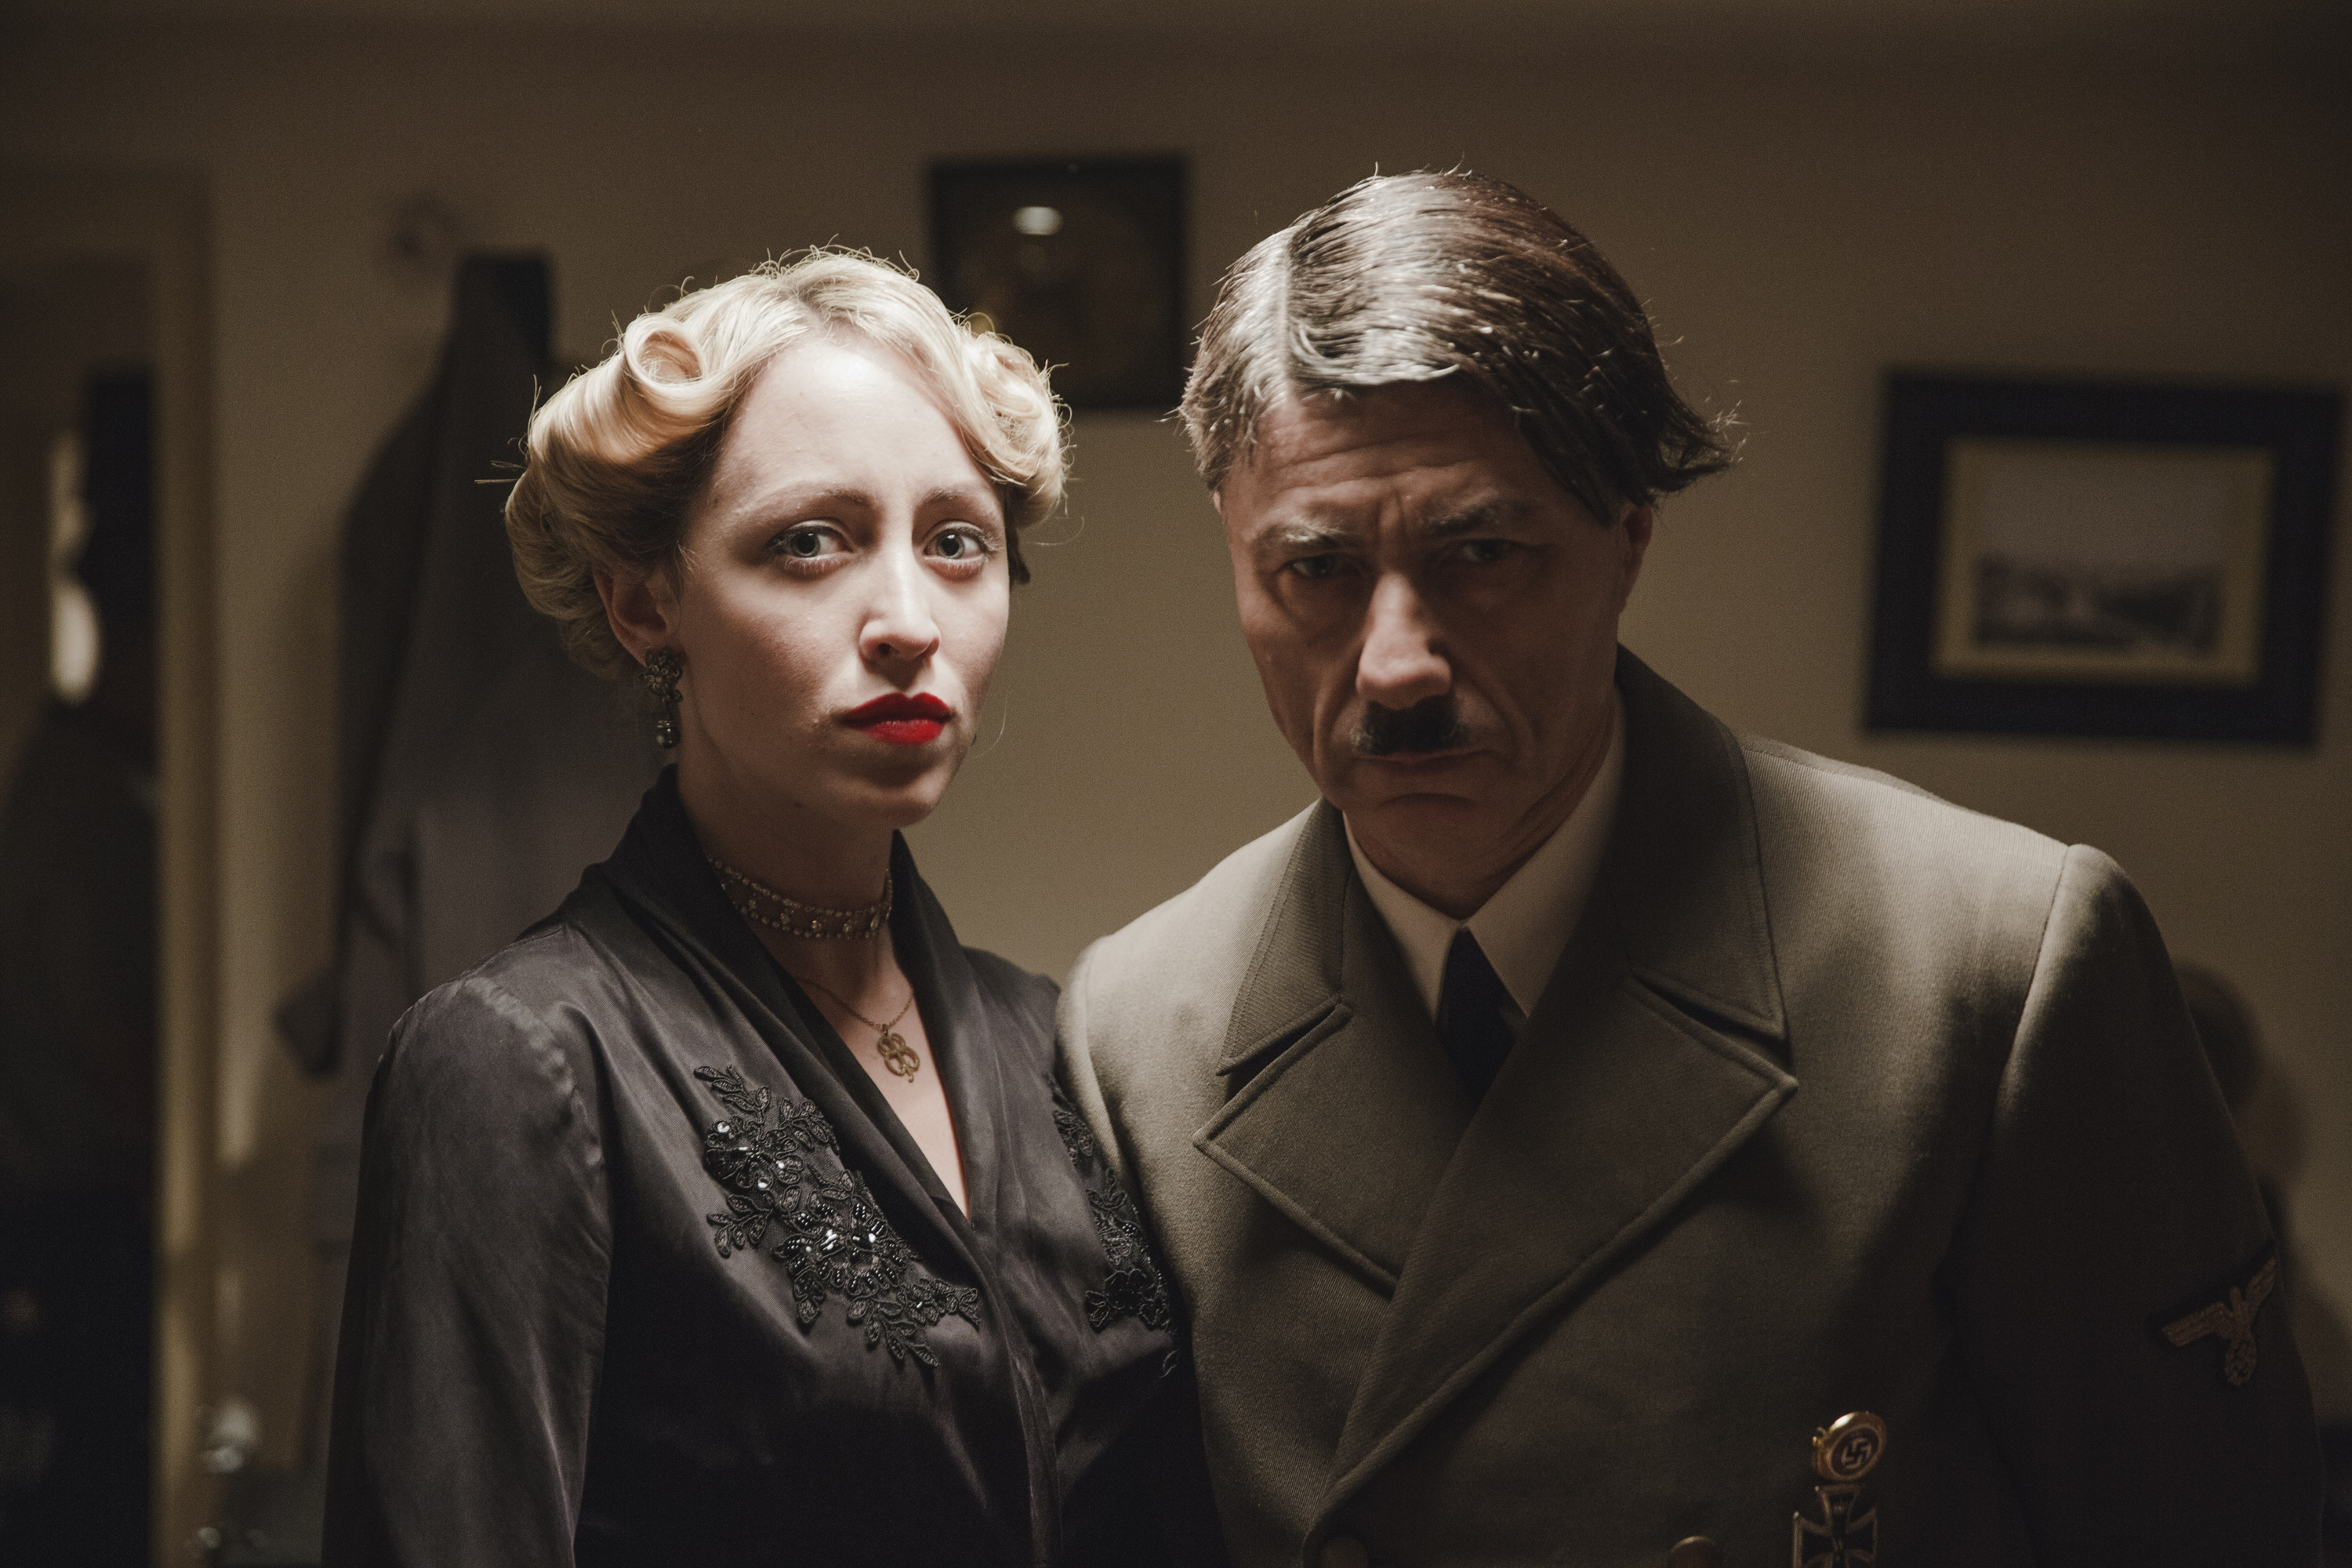 Adolf & Eva: Love & War